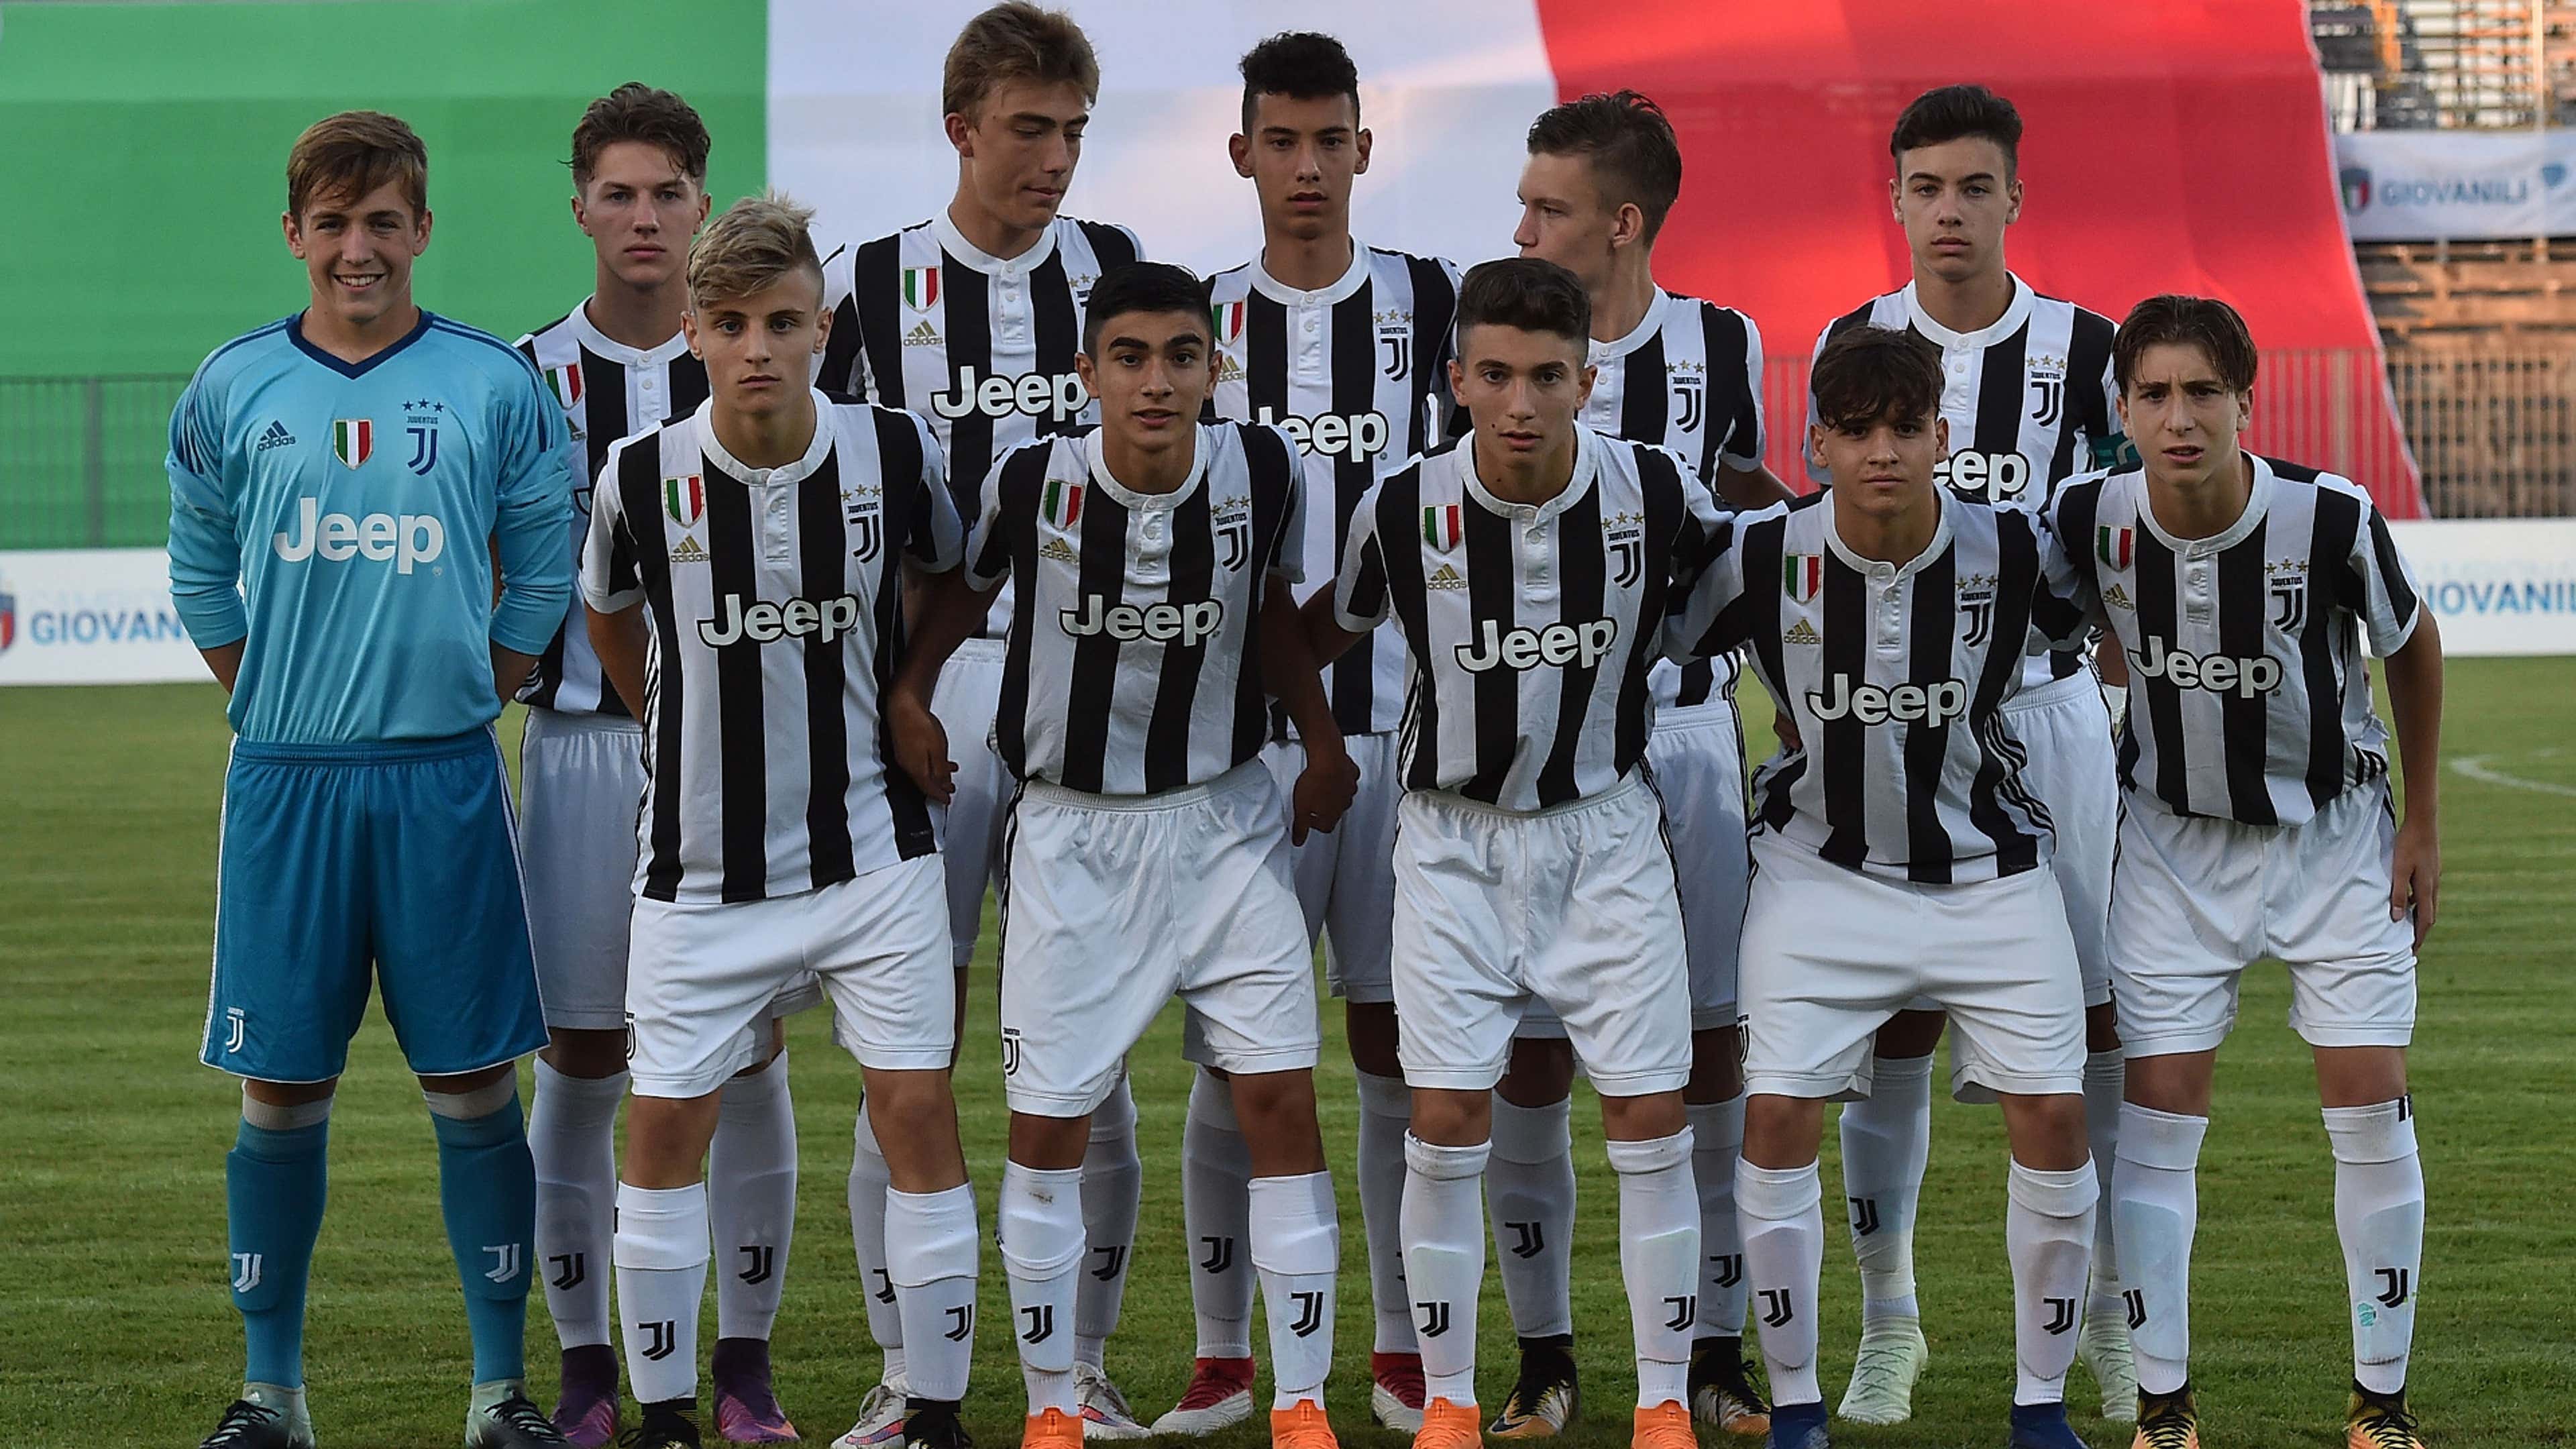 Juventus Under-15s